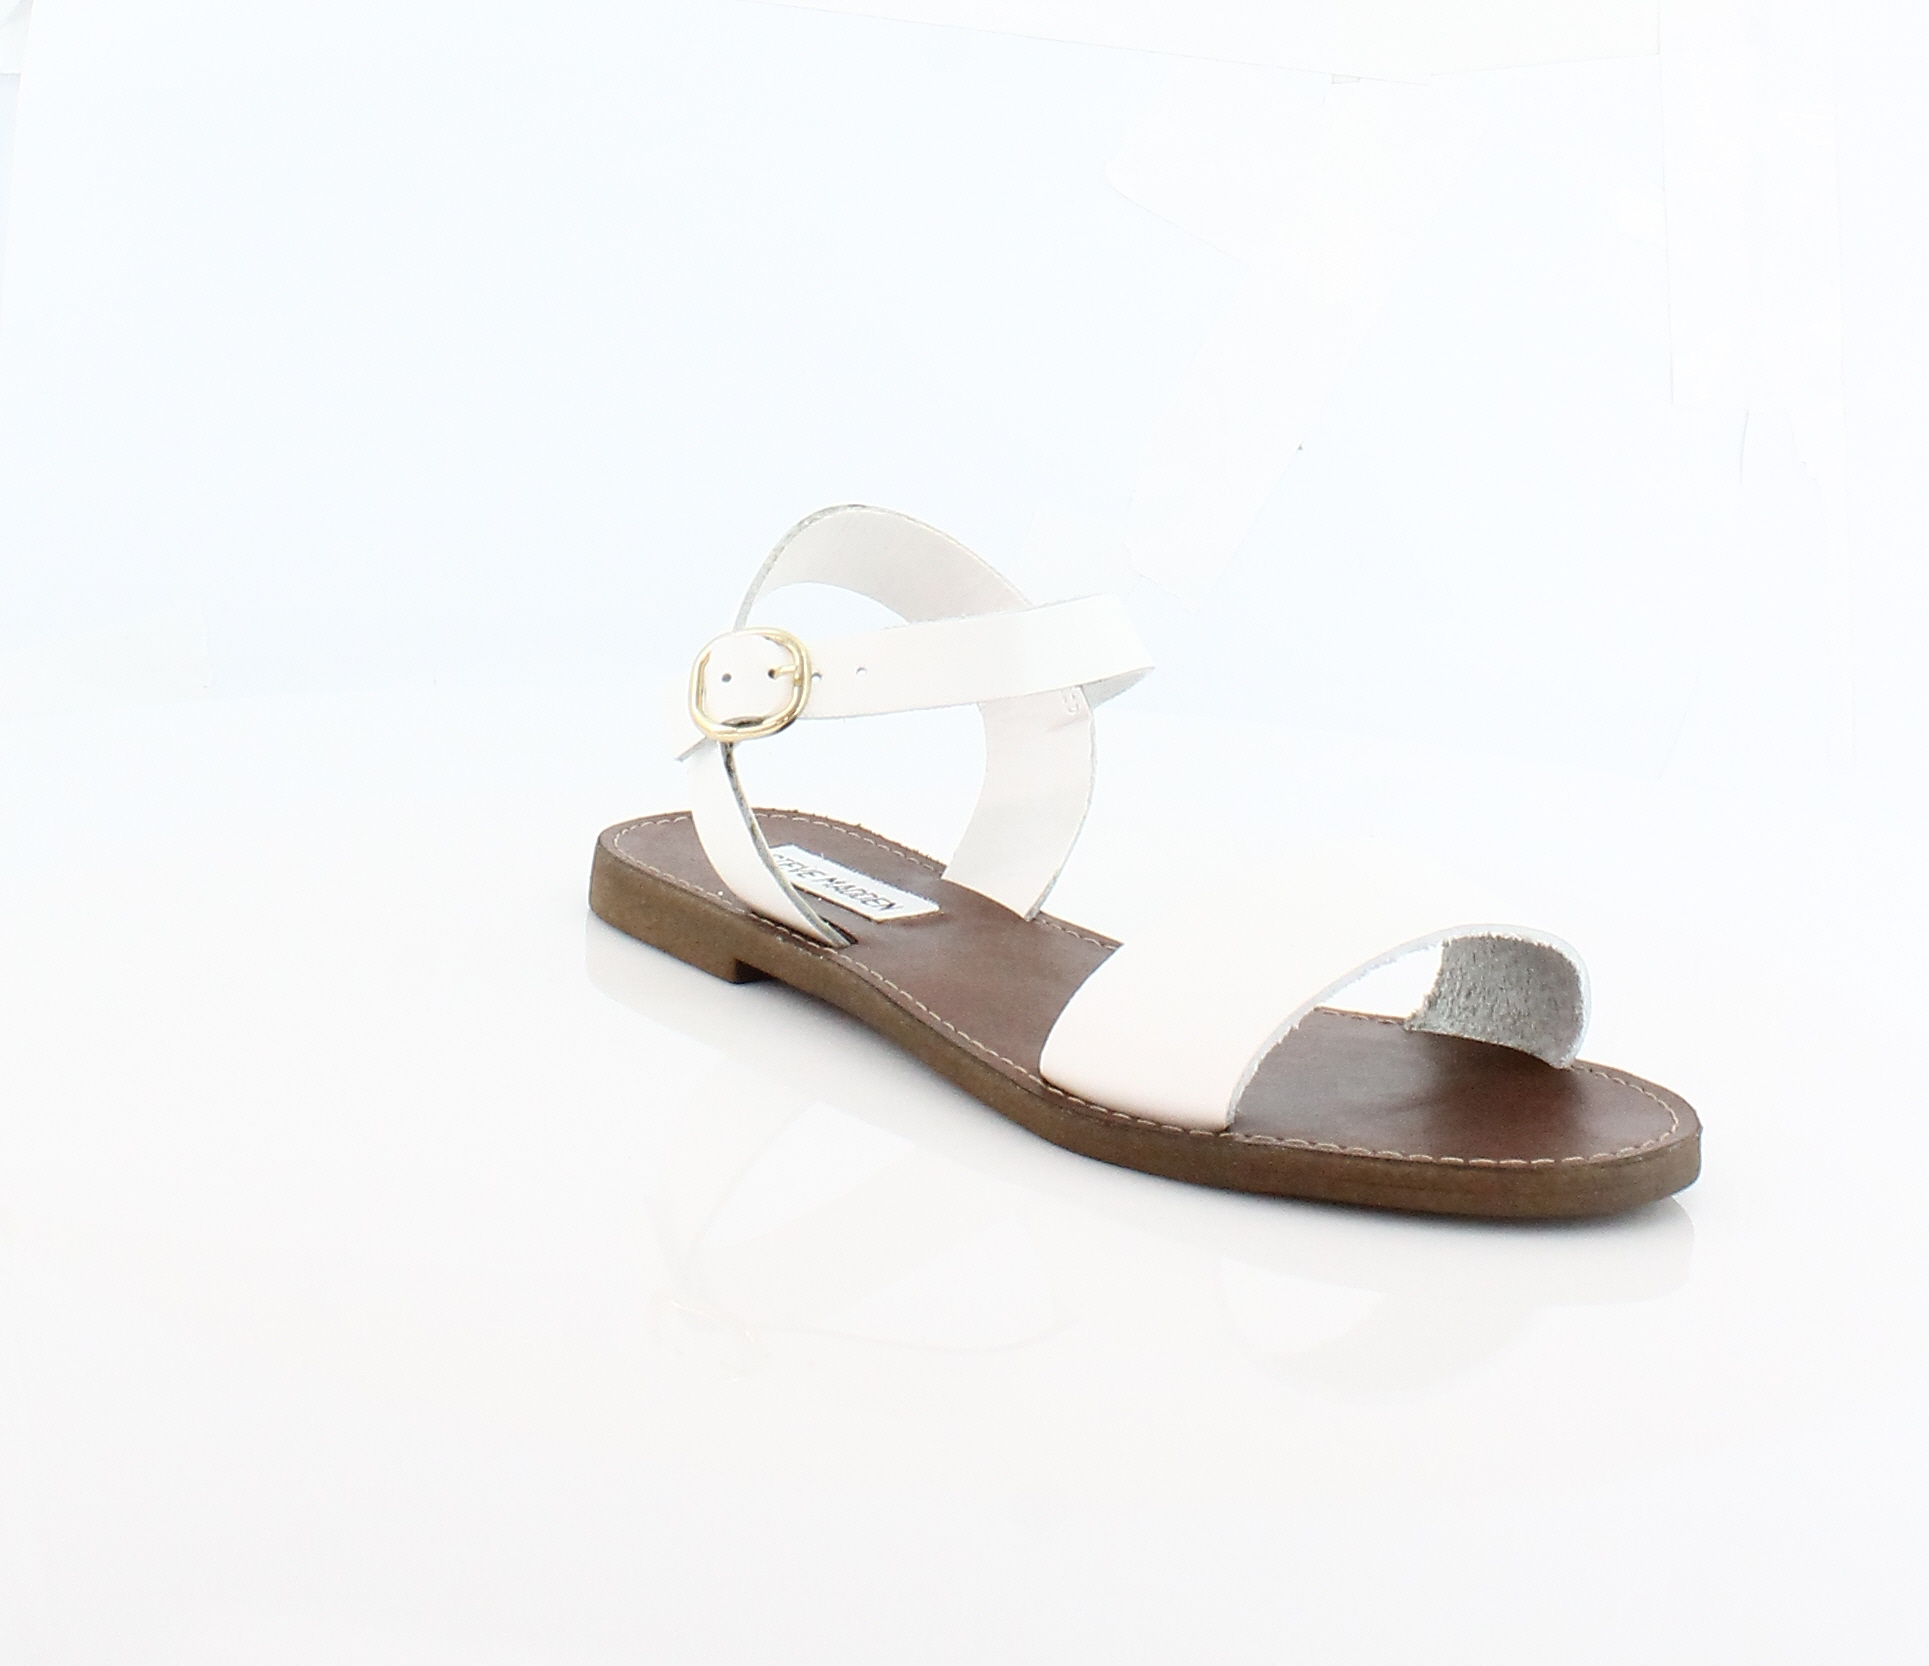 Cuyo Perezoso Señora Steve Madden Donddi Women's Sandals White Leather | eBay